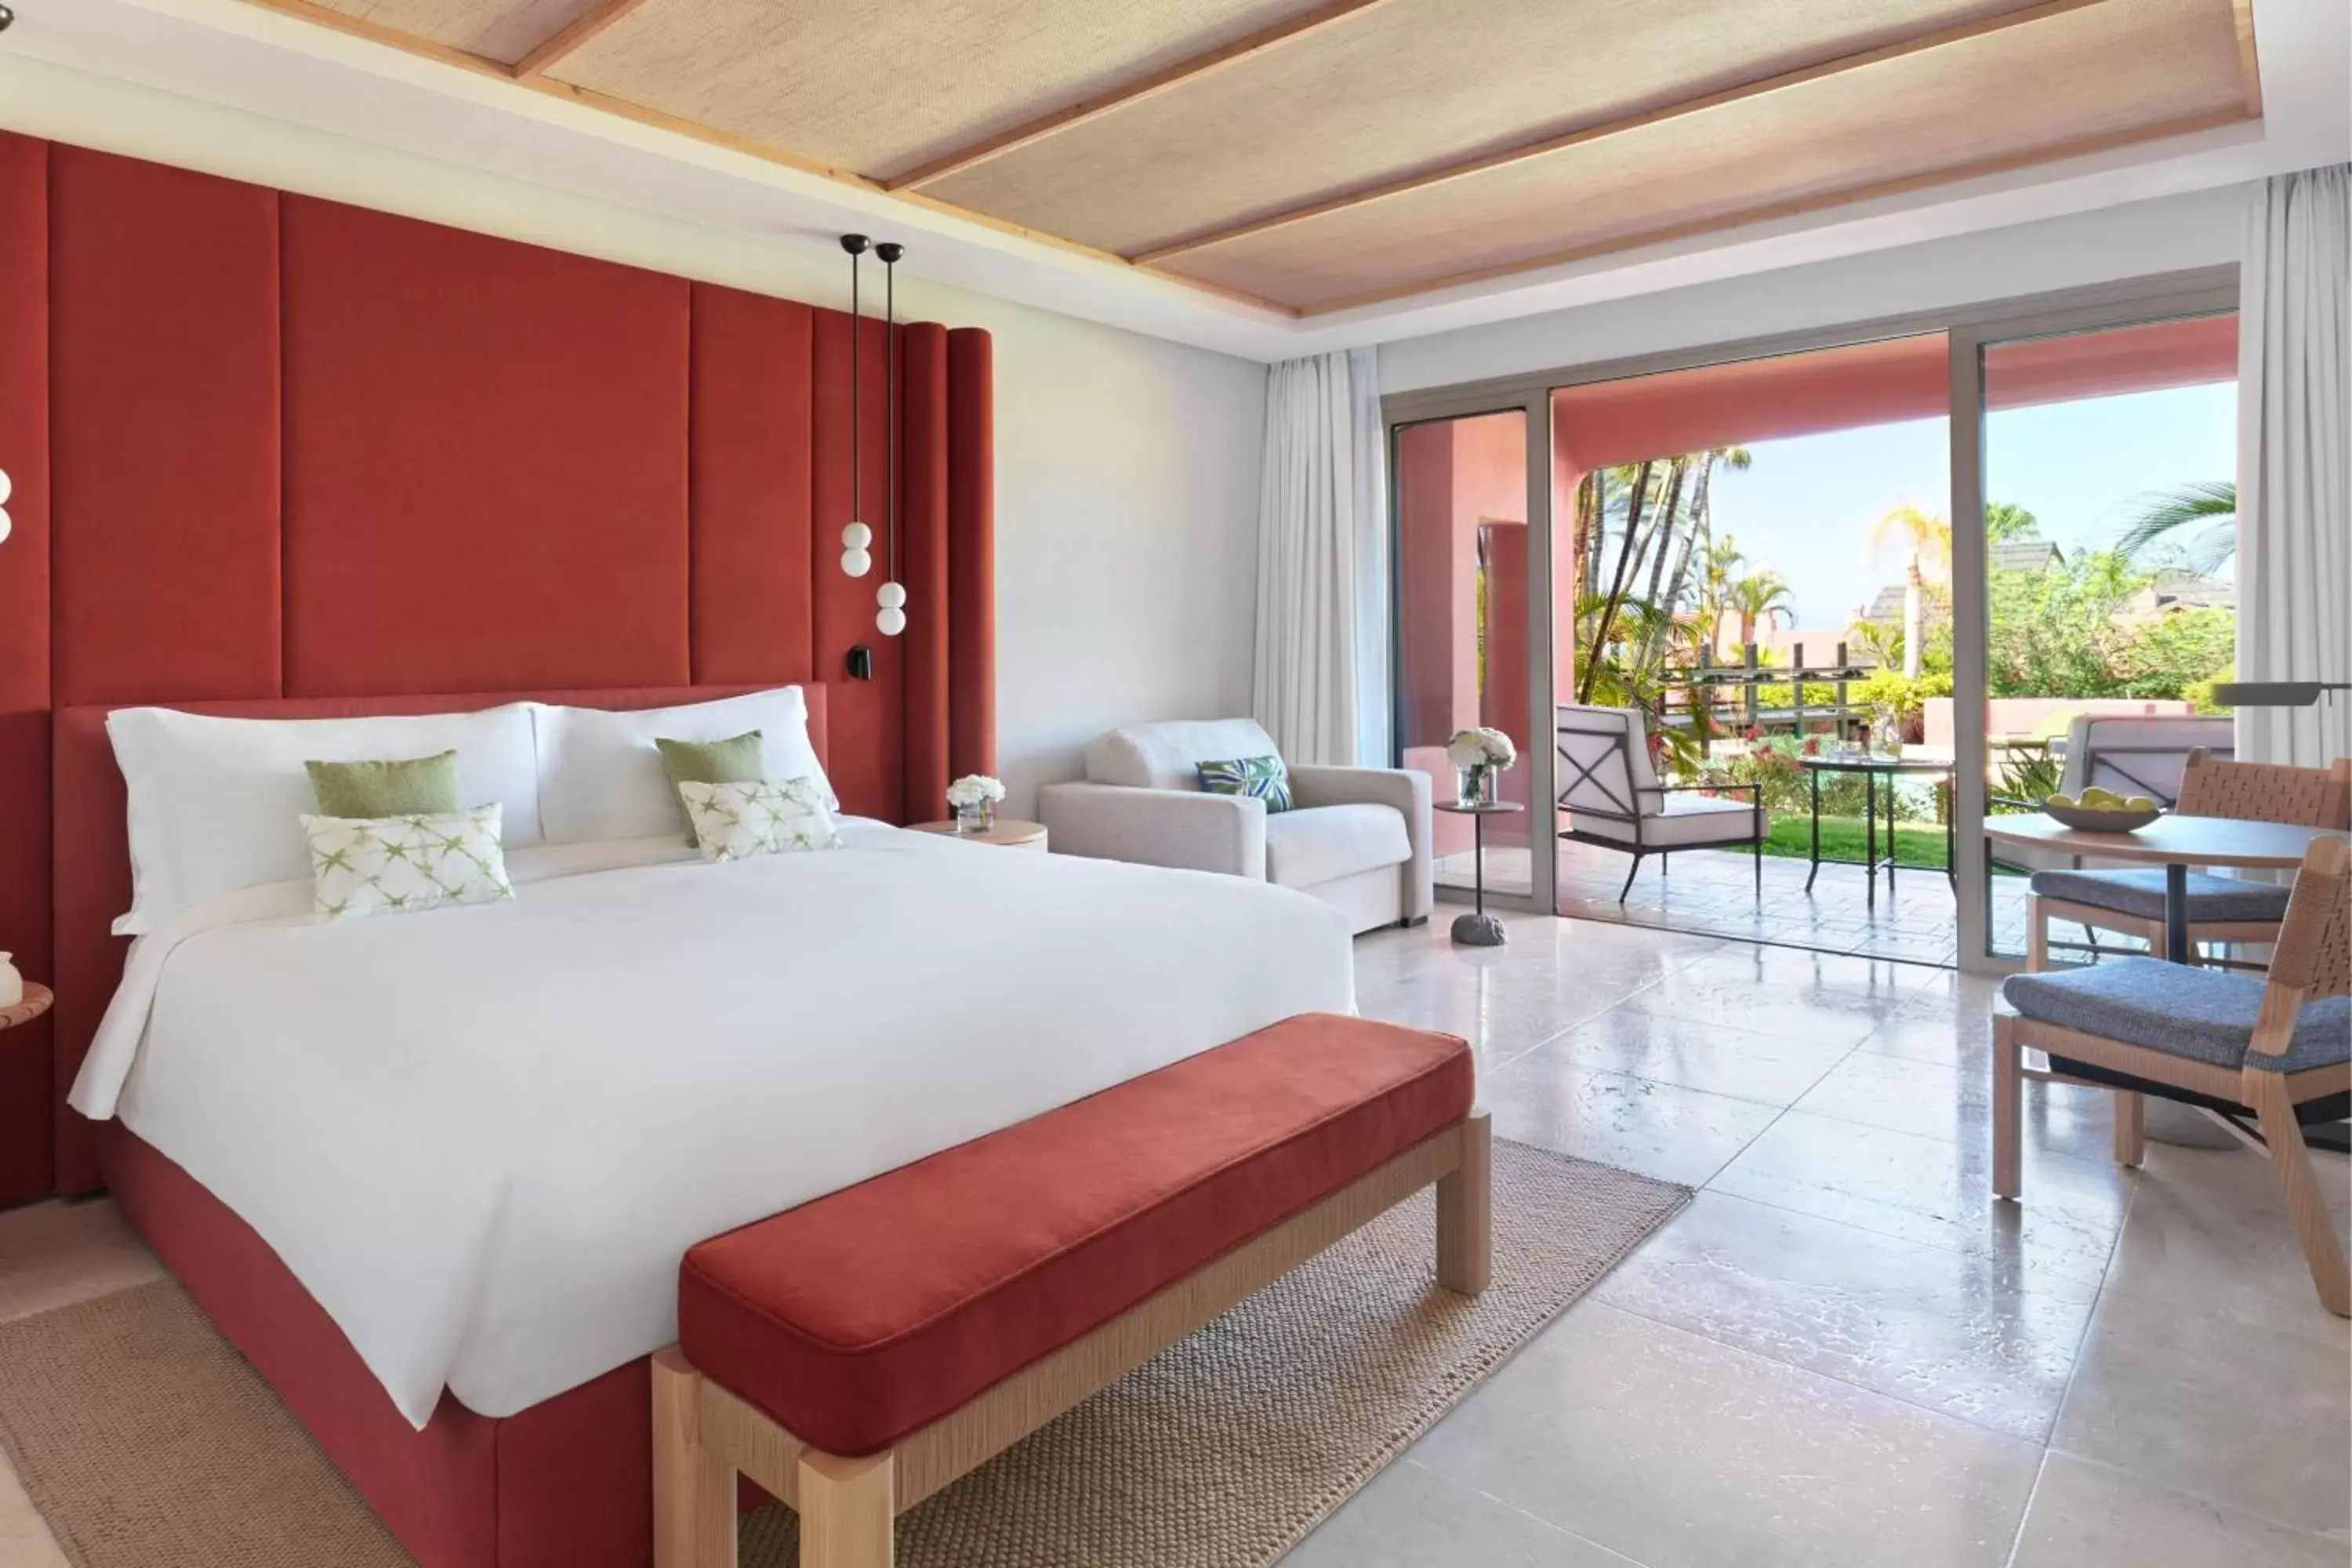 Bedroom in The Ritz-Carlton Tenerife, Abama